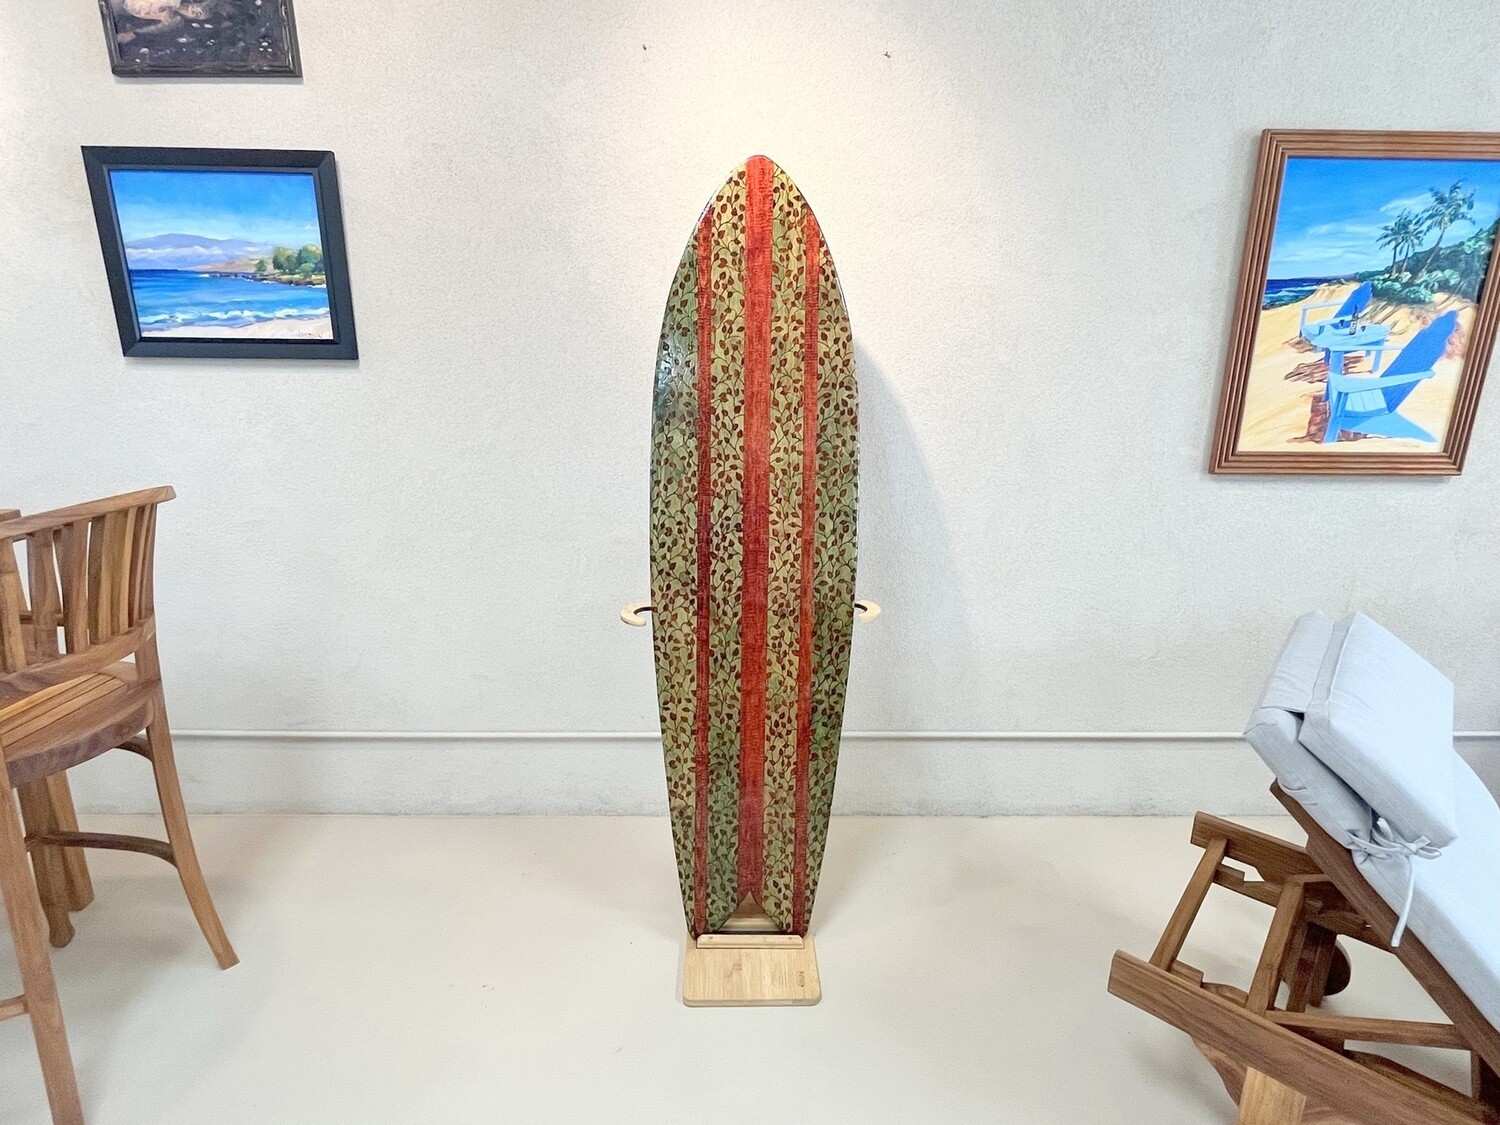 Original Wood Surfboard Art - "Leaves" Design